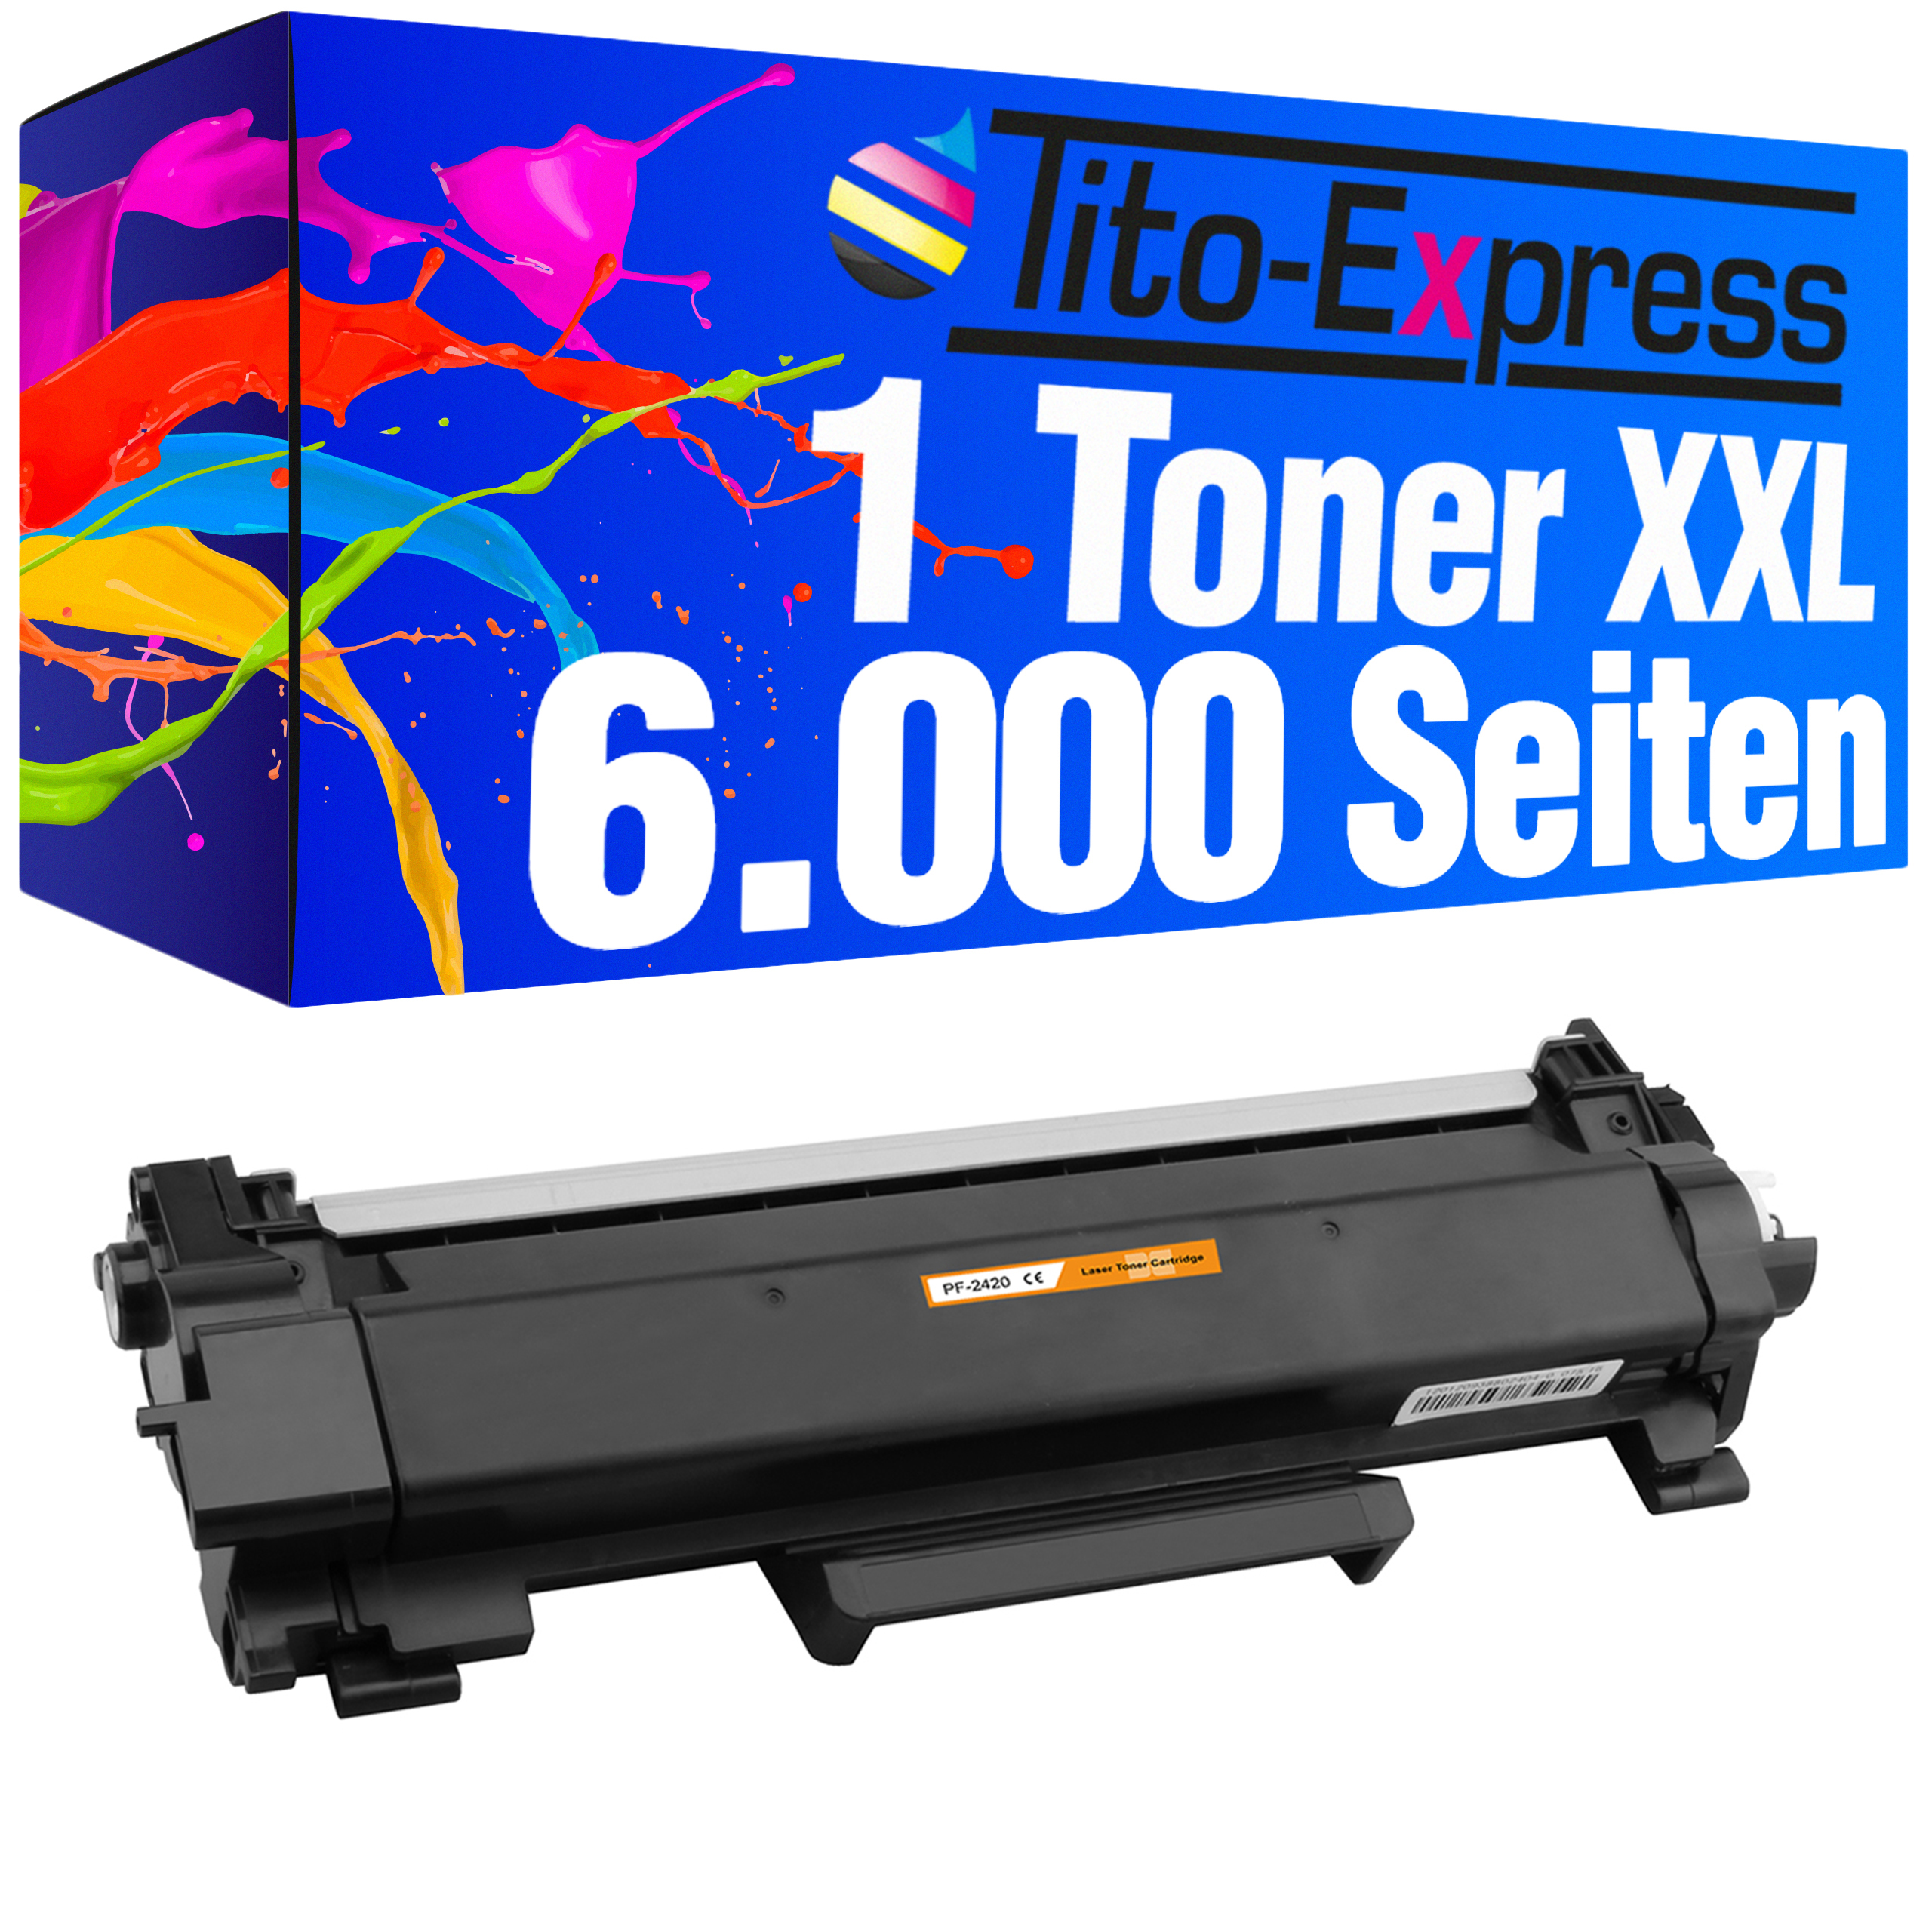 TITO-EXPRESS PLATINUMSERIE Toner Toner (TN-2420) Brother 1 ersetzt TN-2420 Black Super-XL